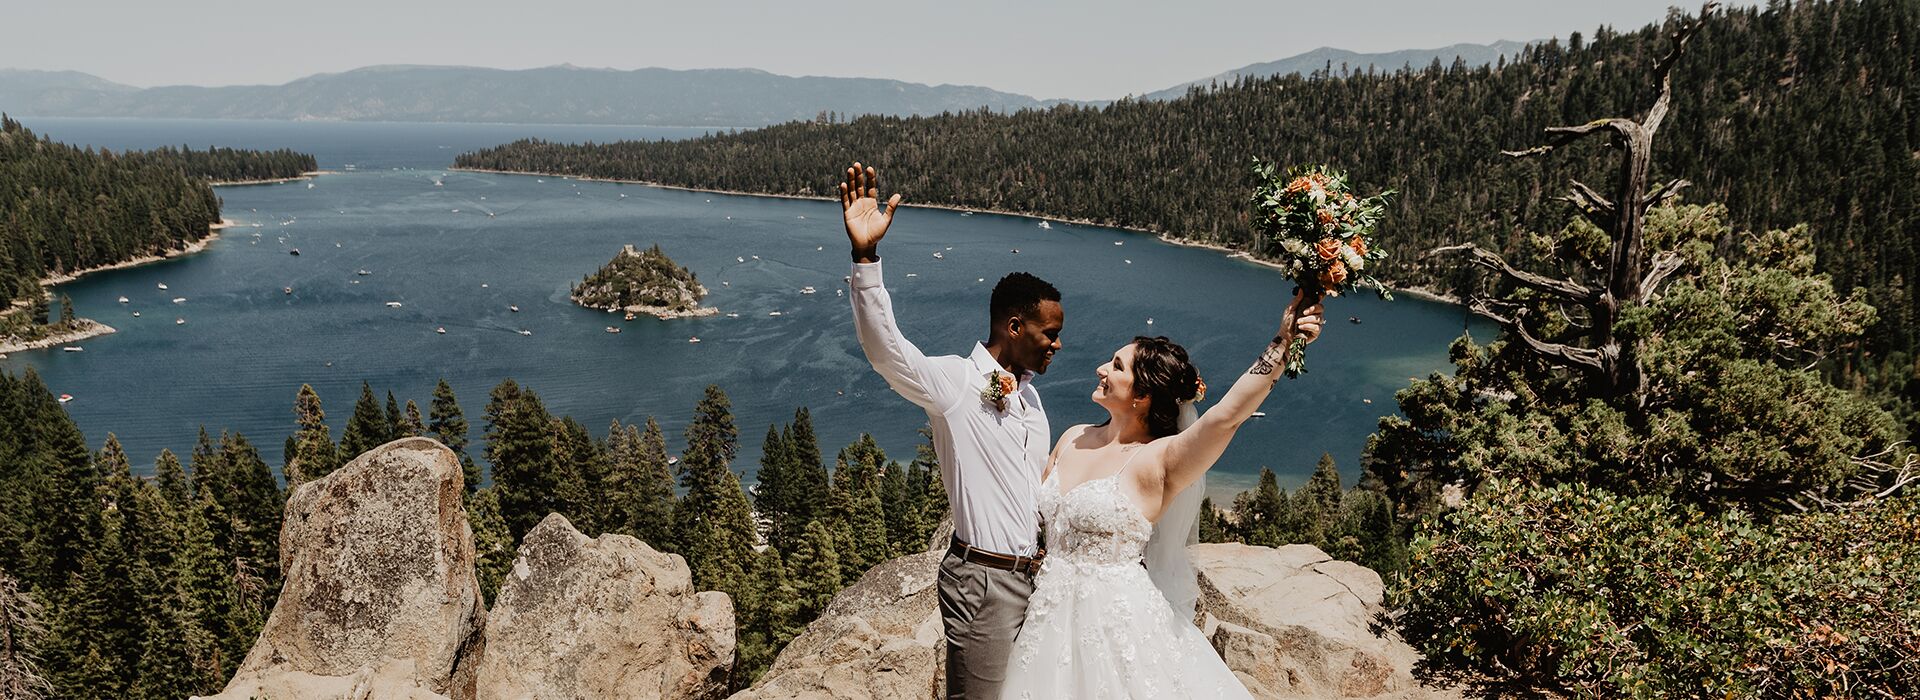 Lake Tahoe Small Wedding Venues